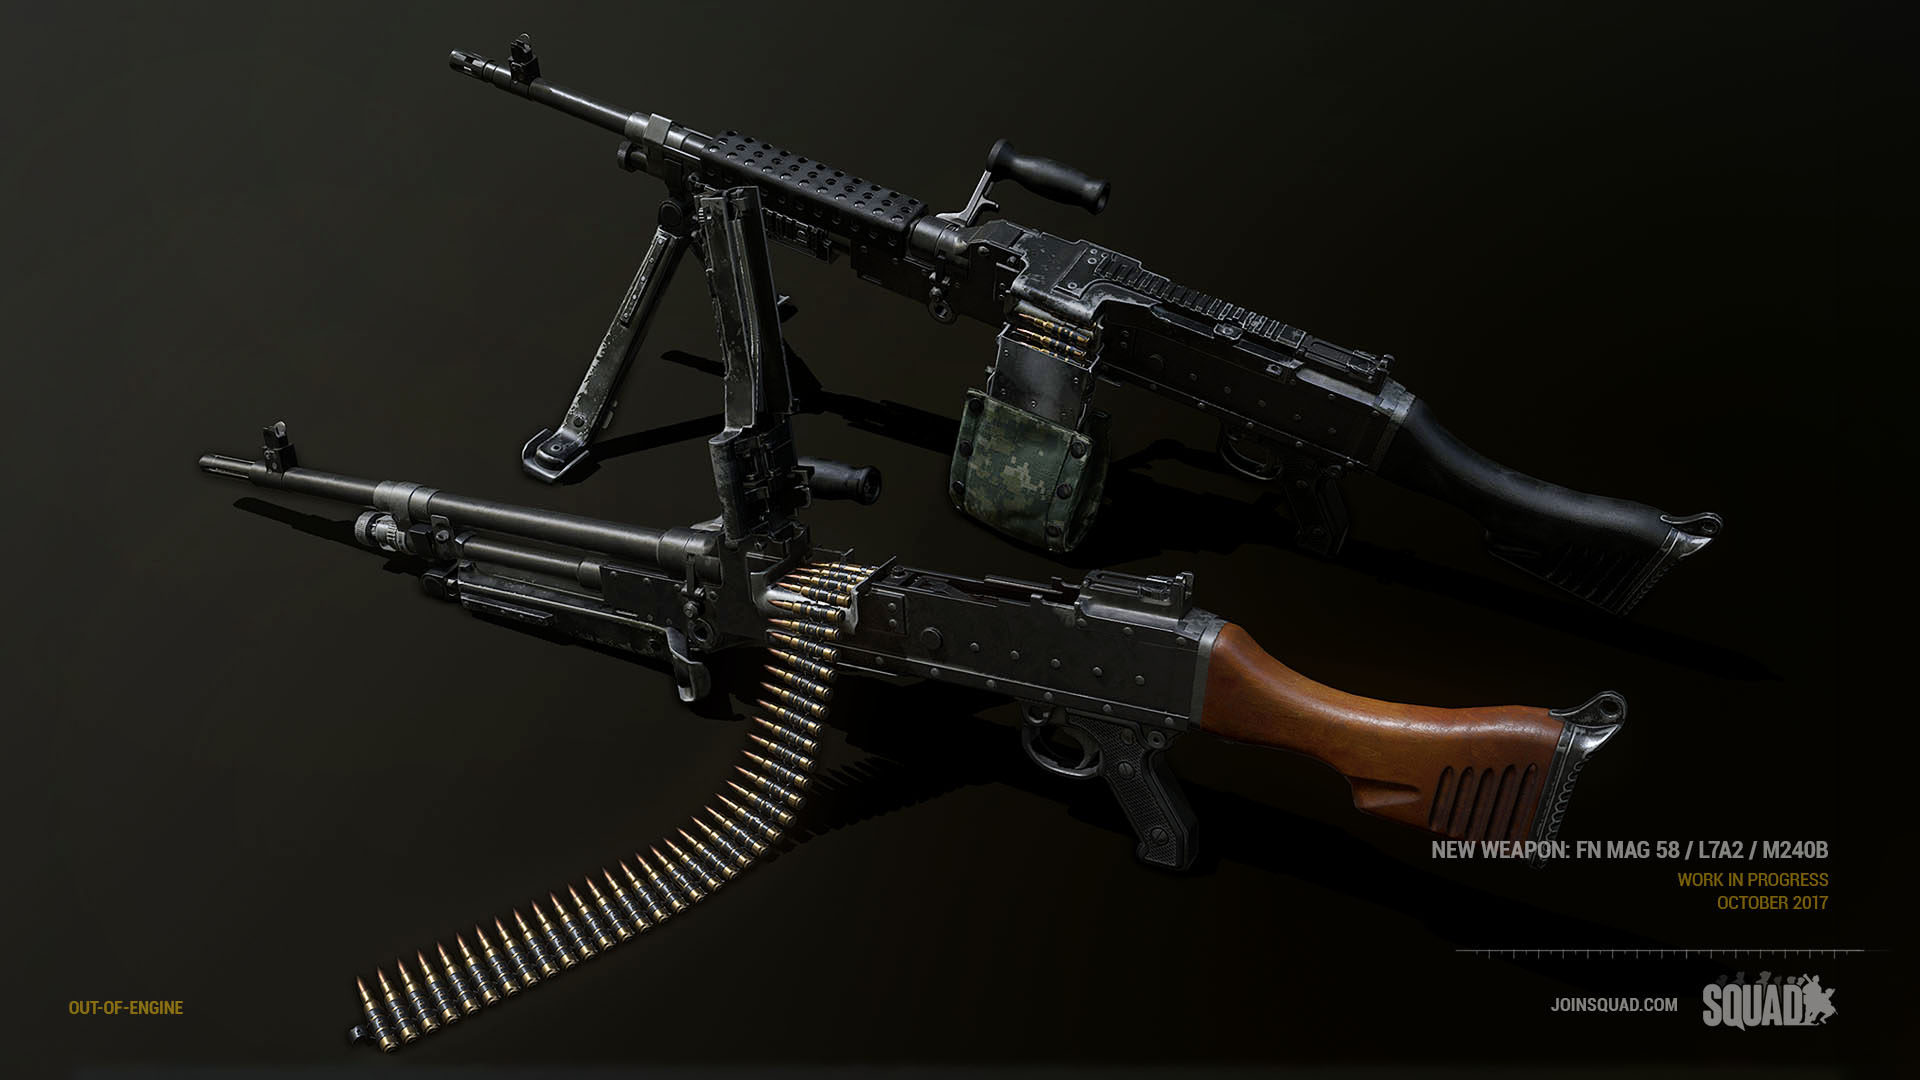 PBR简模 次时代 手绘塔防 科幻热武器 机枪 机关枪 模型-火炮器械模型库-3ds Max(.max)模型下载-cg模型网